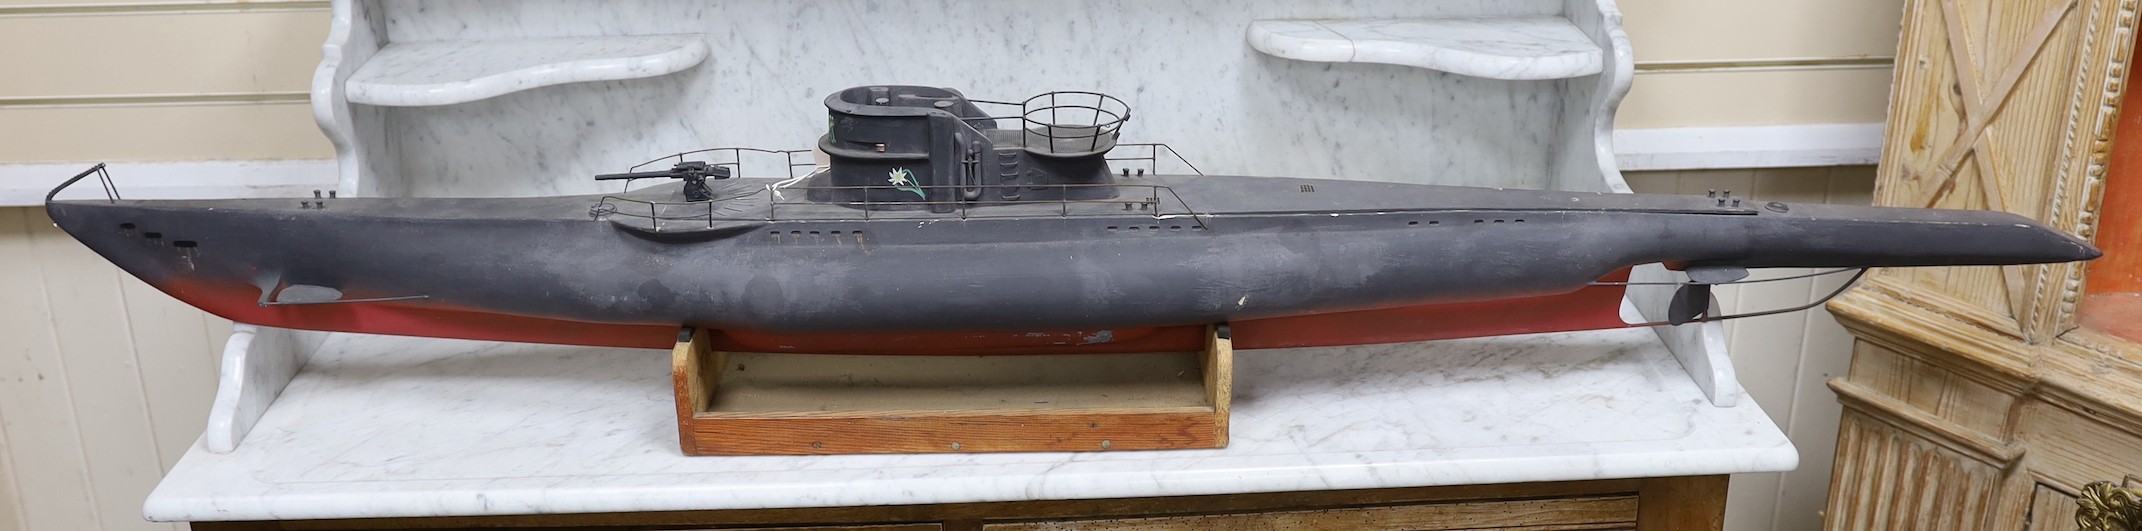 A painted wood model of a German U boat, 170 cms long